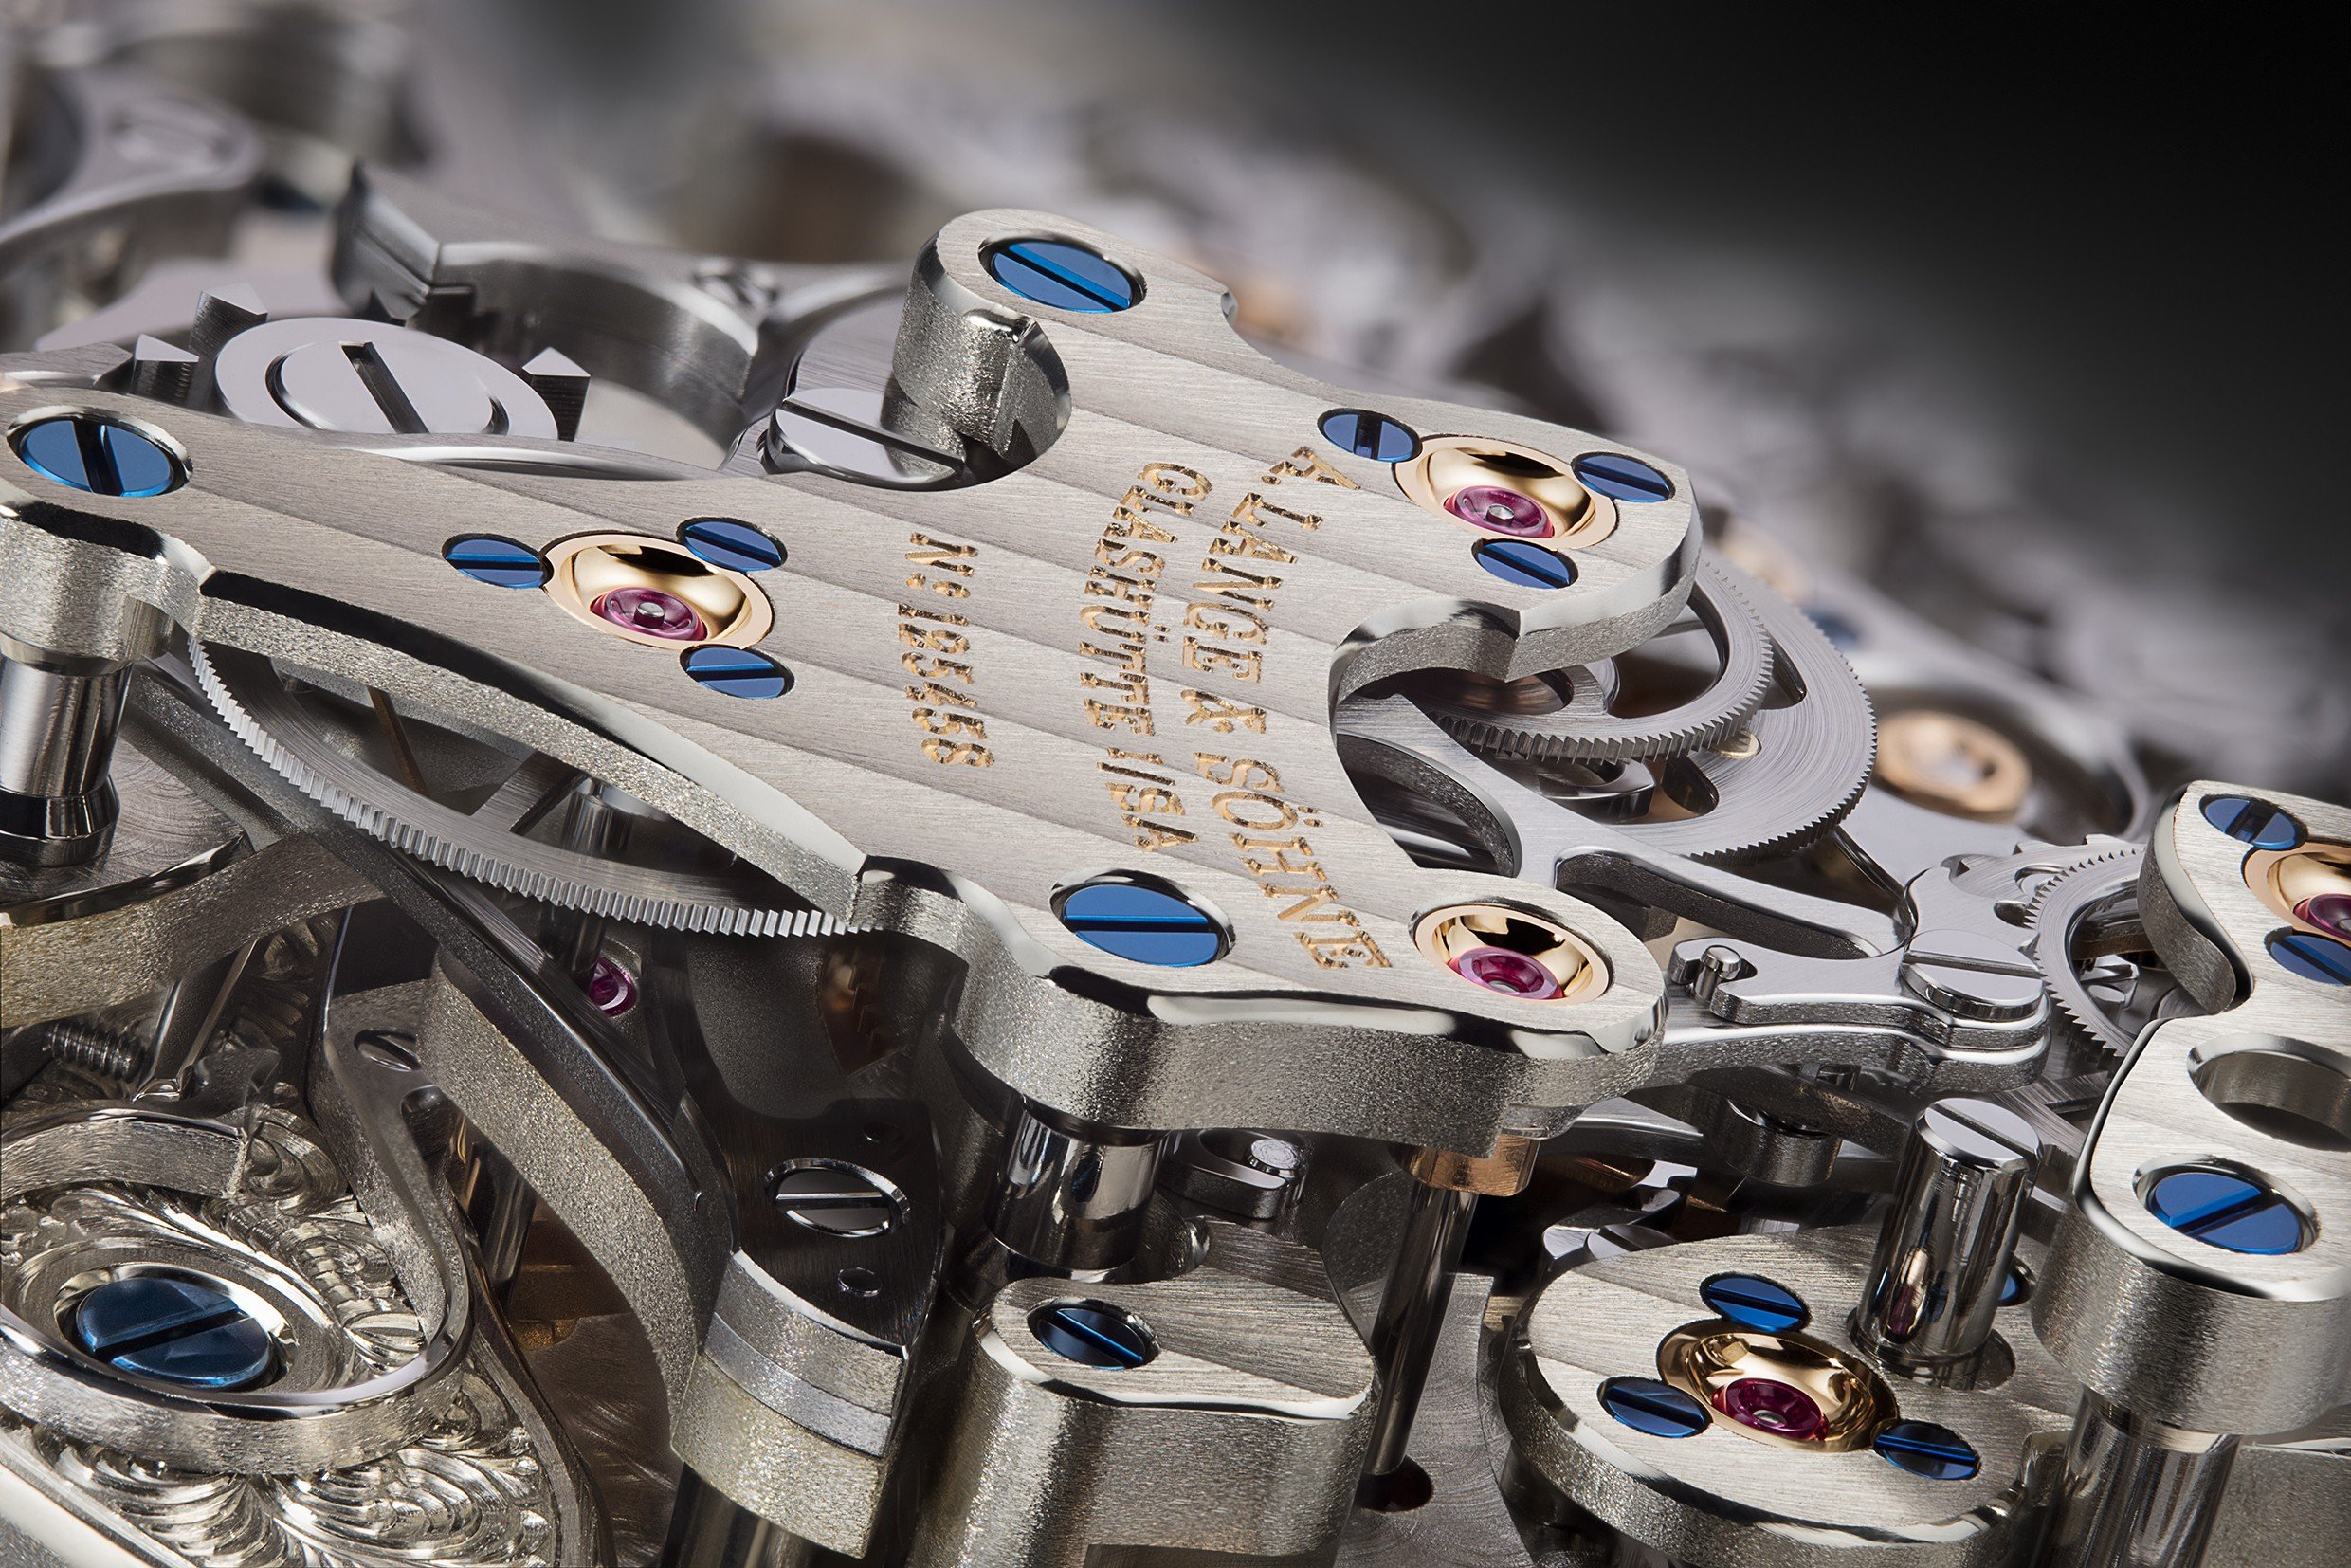 The manufacture calibre L132.1 is a new movement that powers A. Lange & Söhne’s Triple Split Chronograph.